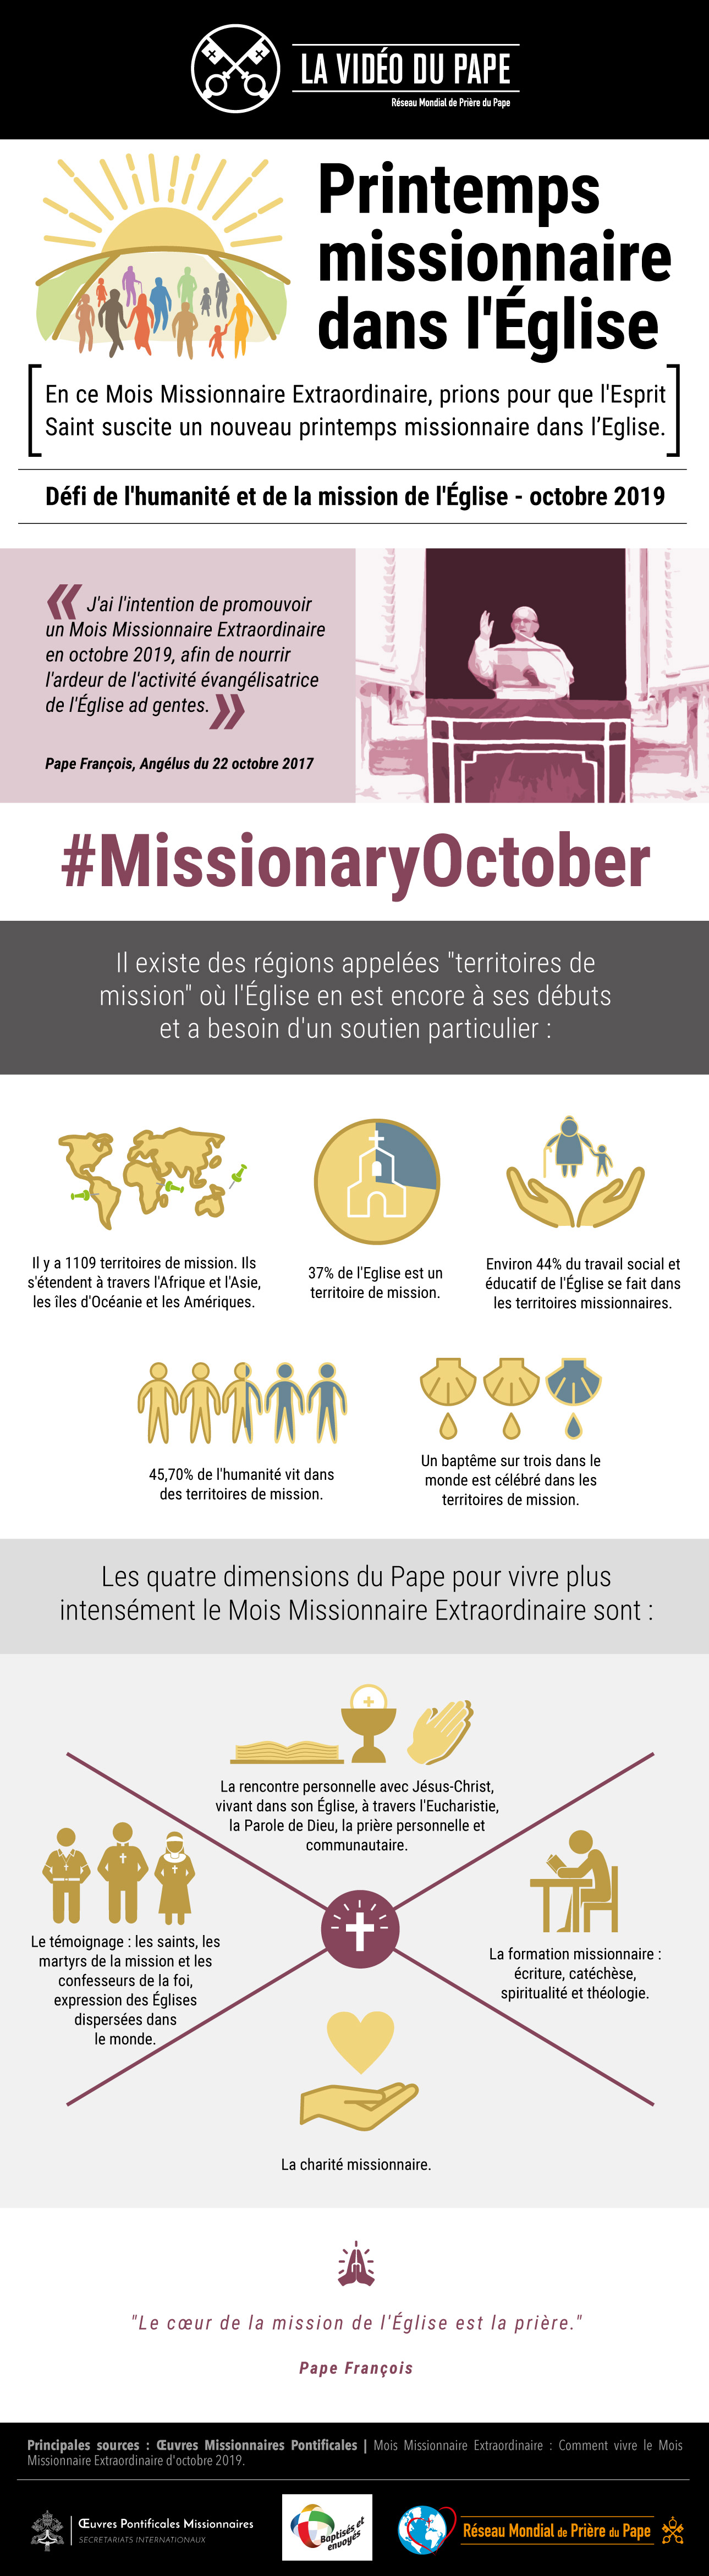 infografia-tpv-10-2019-fr-printemps-missionnaire-dans-lc389glise.jpg